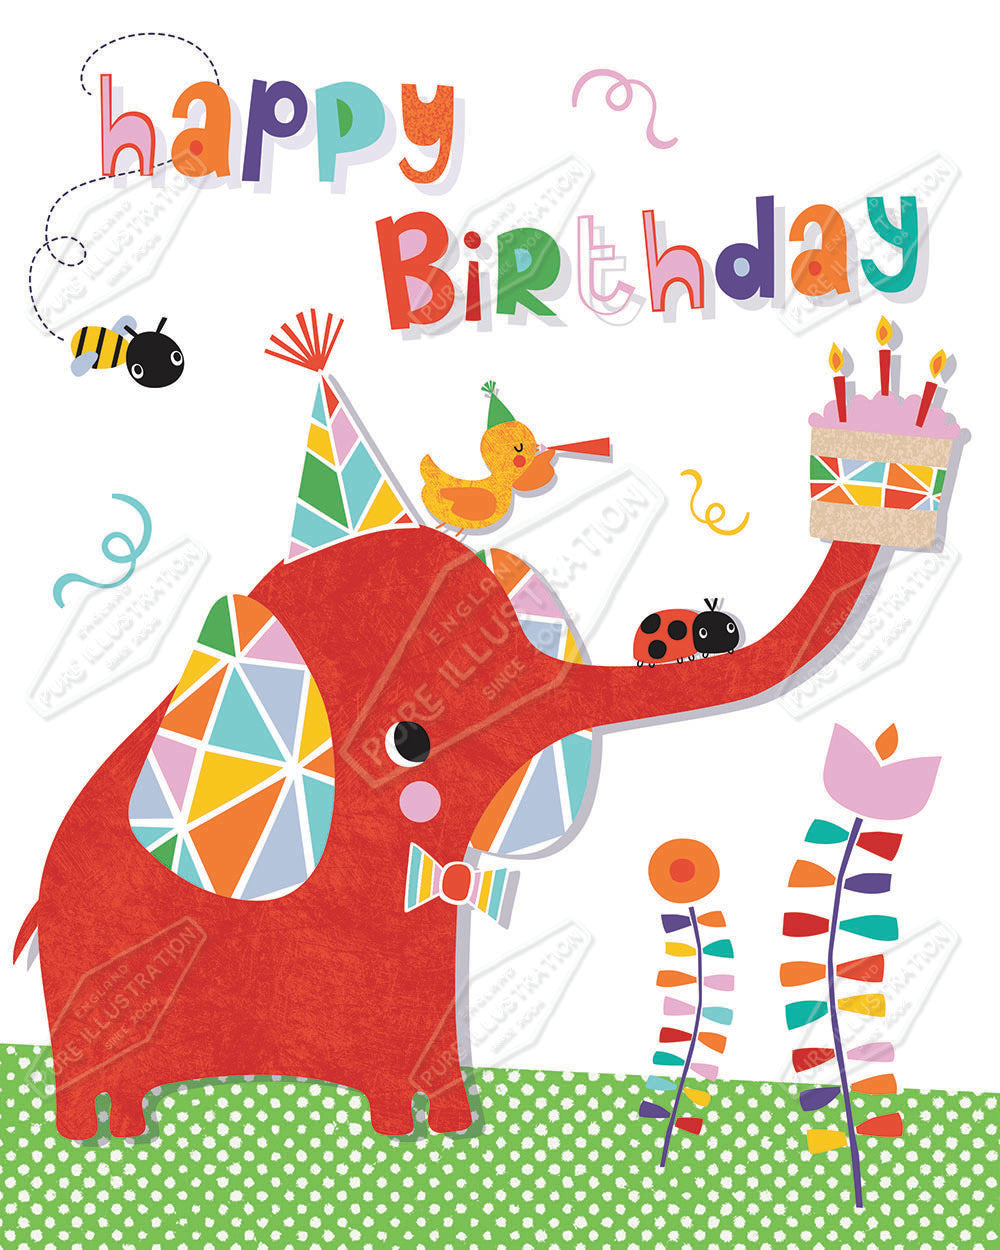 Children's Birthday Elephant Design by Gill Eggleston for Pure Art Licensing Agency & Surface Design Studio